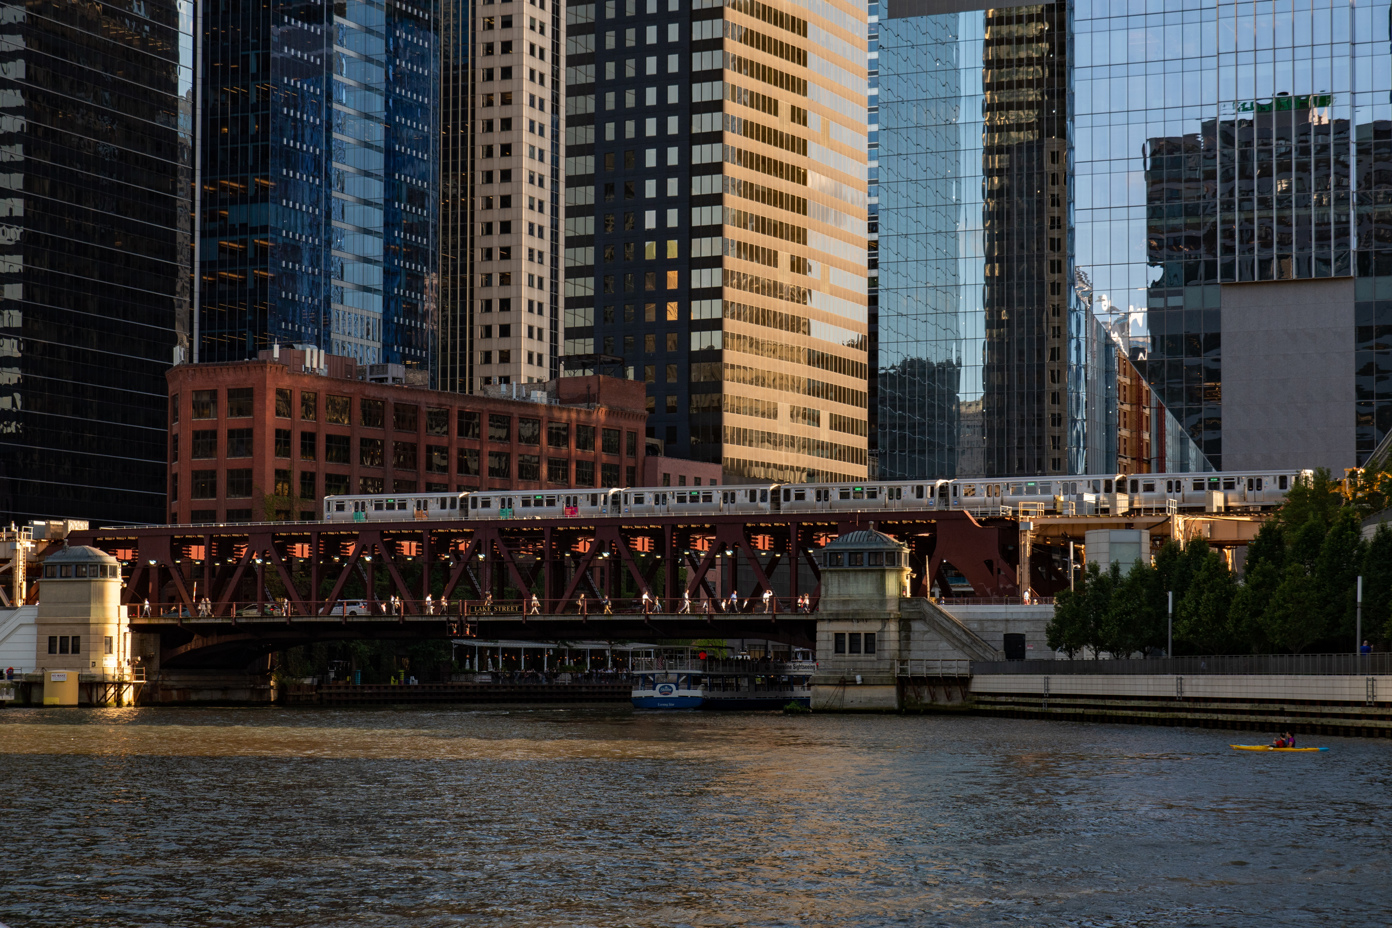 Chicago - Lake Street Bridge